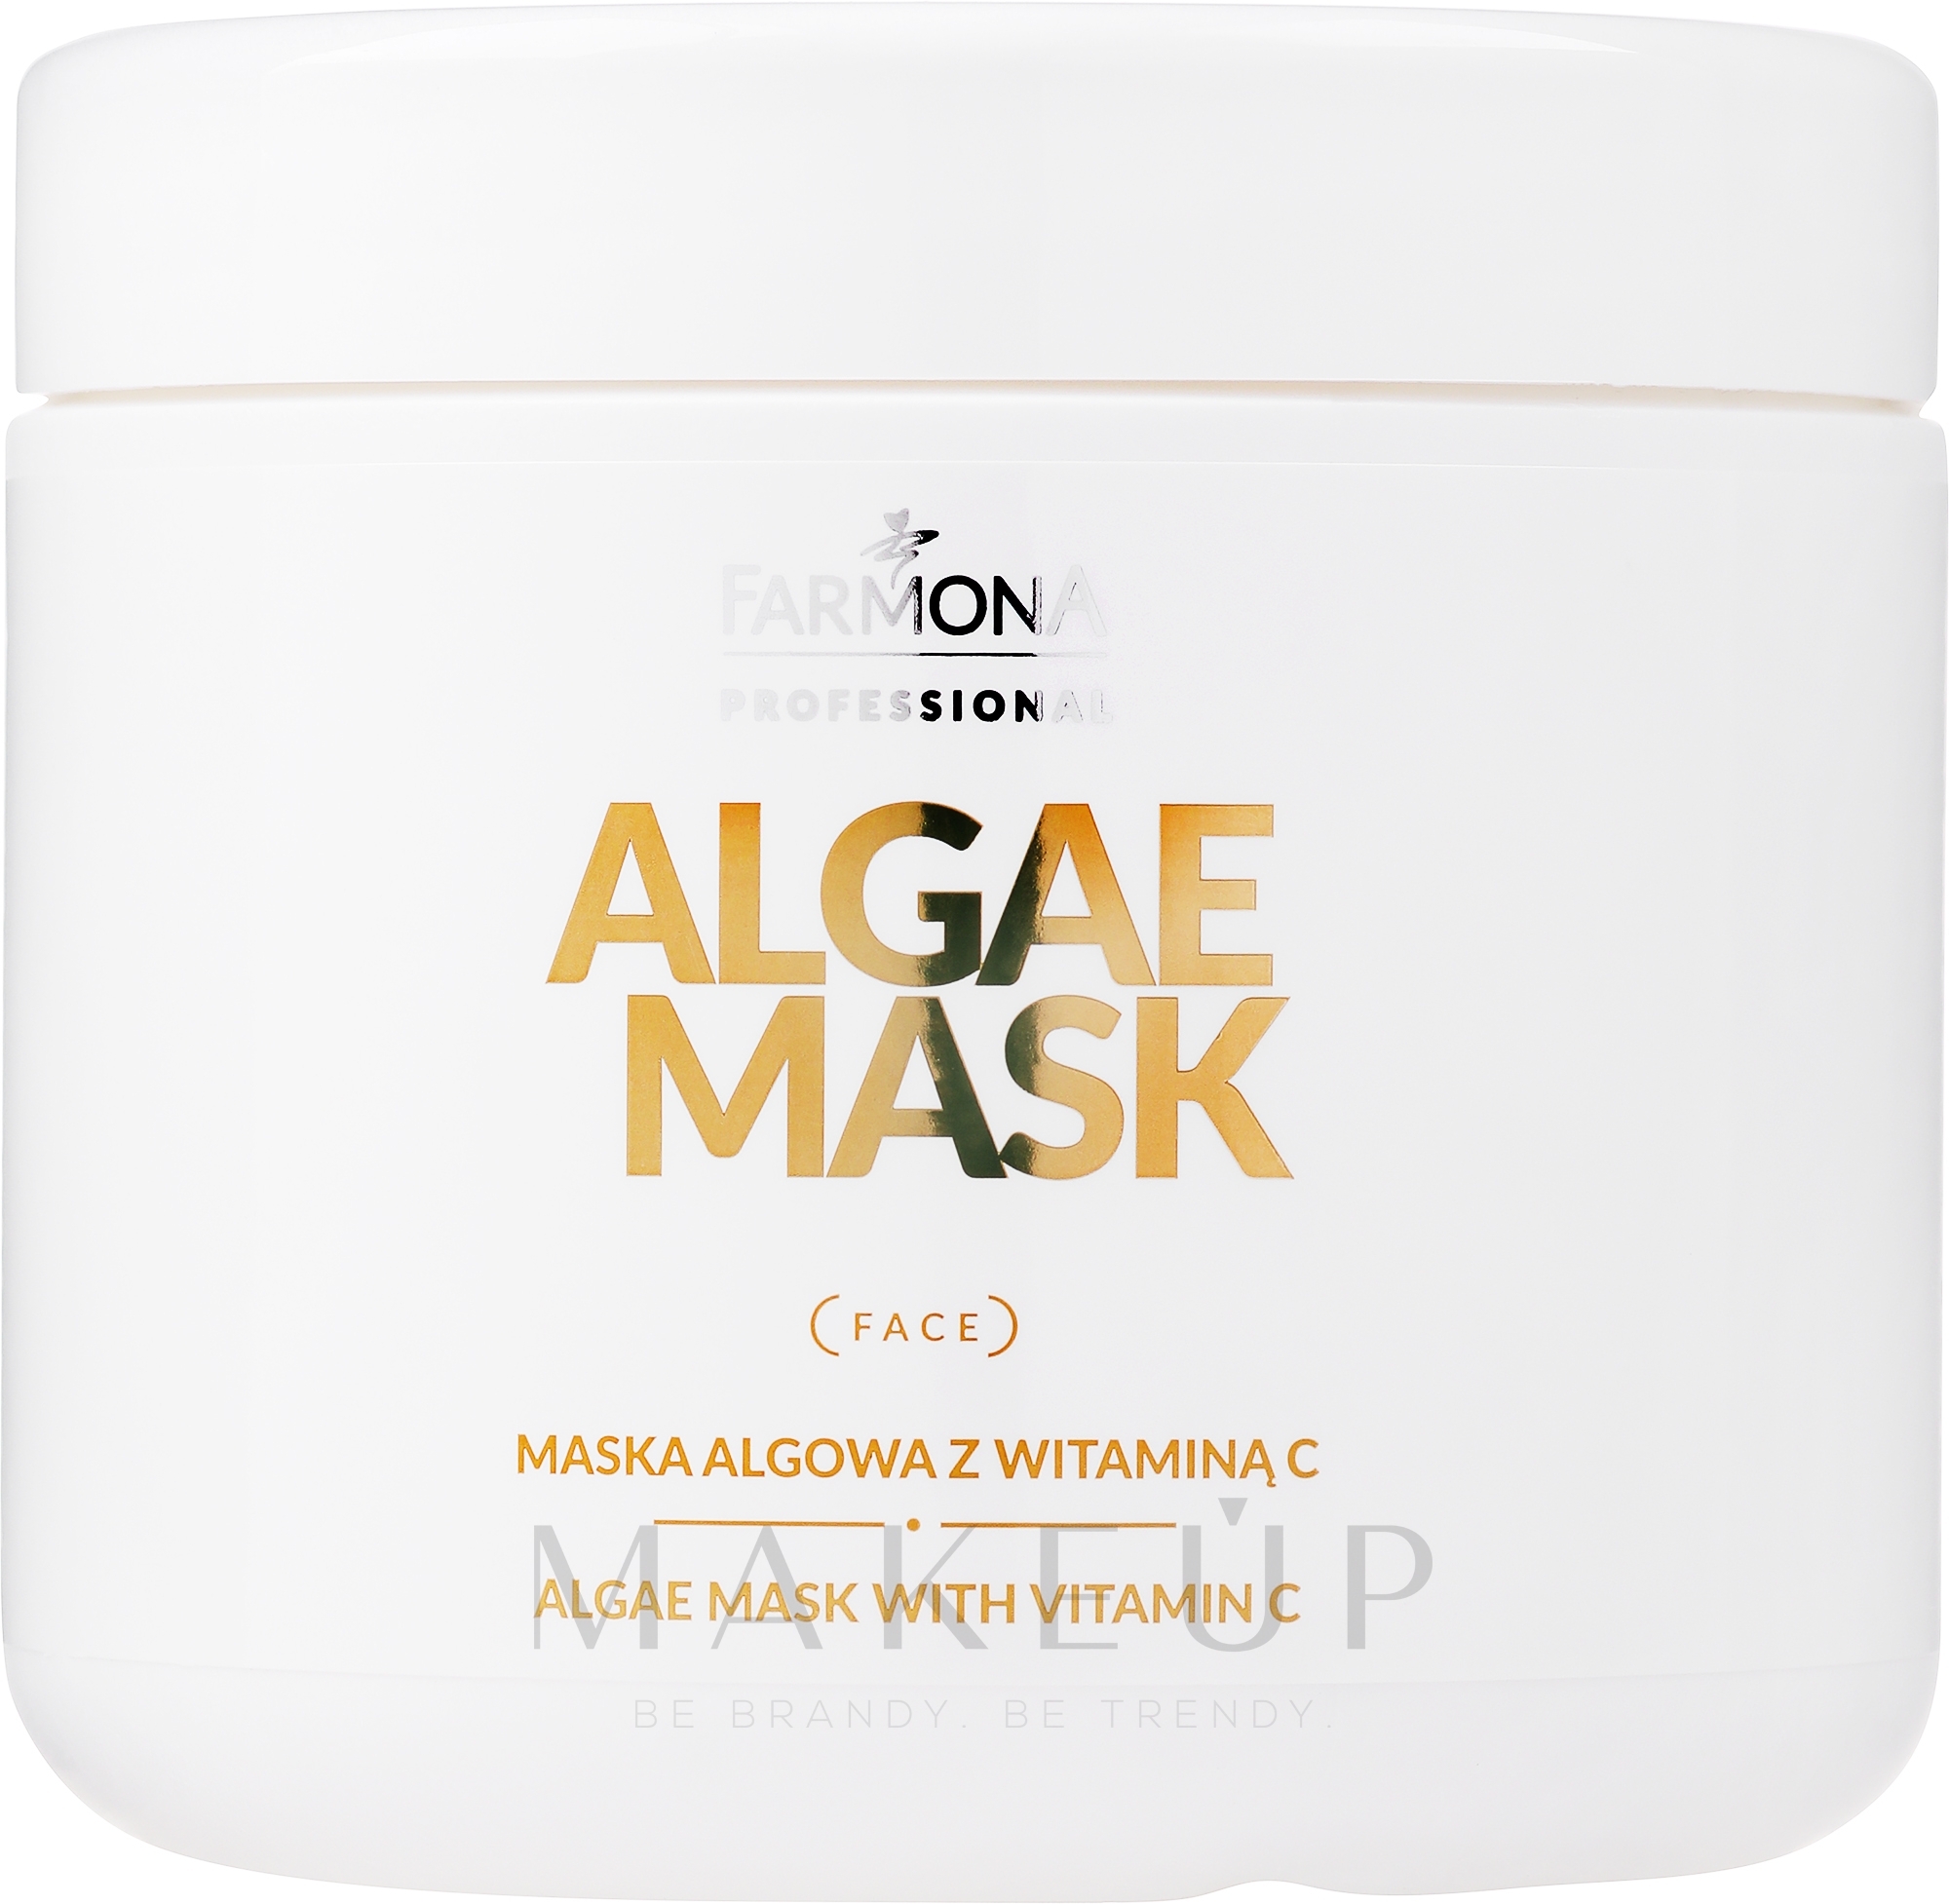 Algenmaske für das Gesicht mit Vitamin C - Farmona Professional Algae Mask With Vitamin C — Foto 500 ml